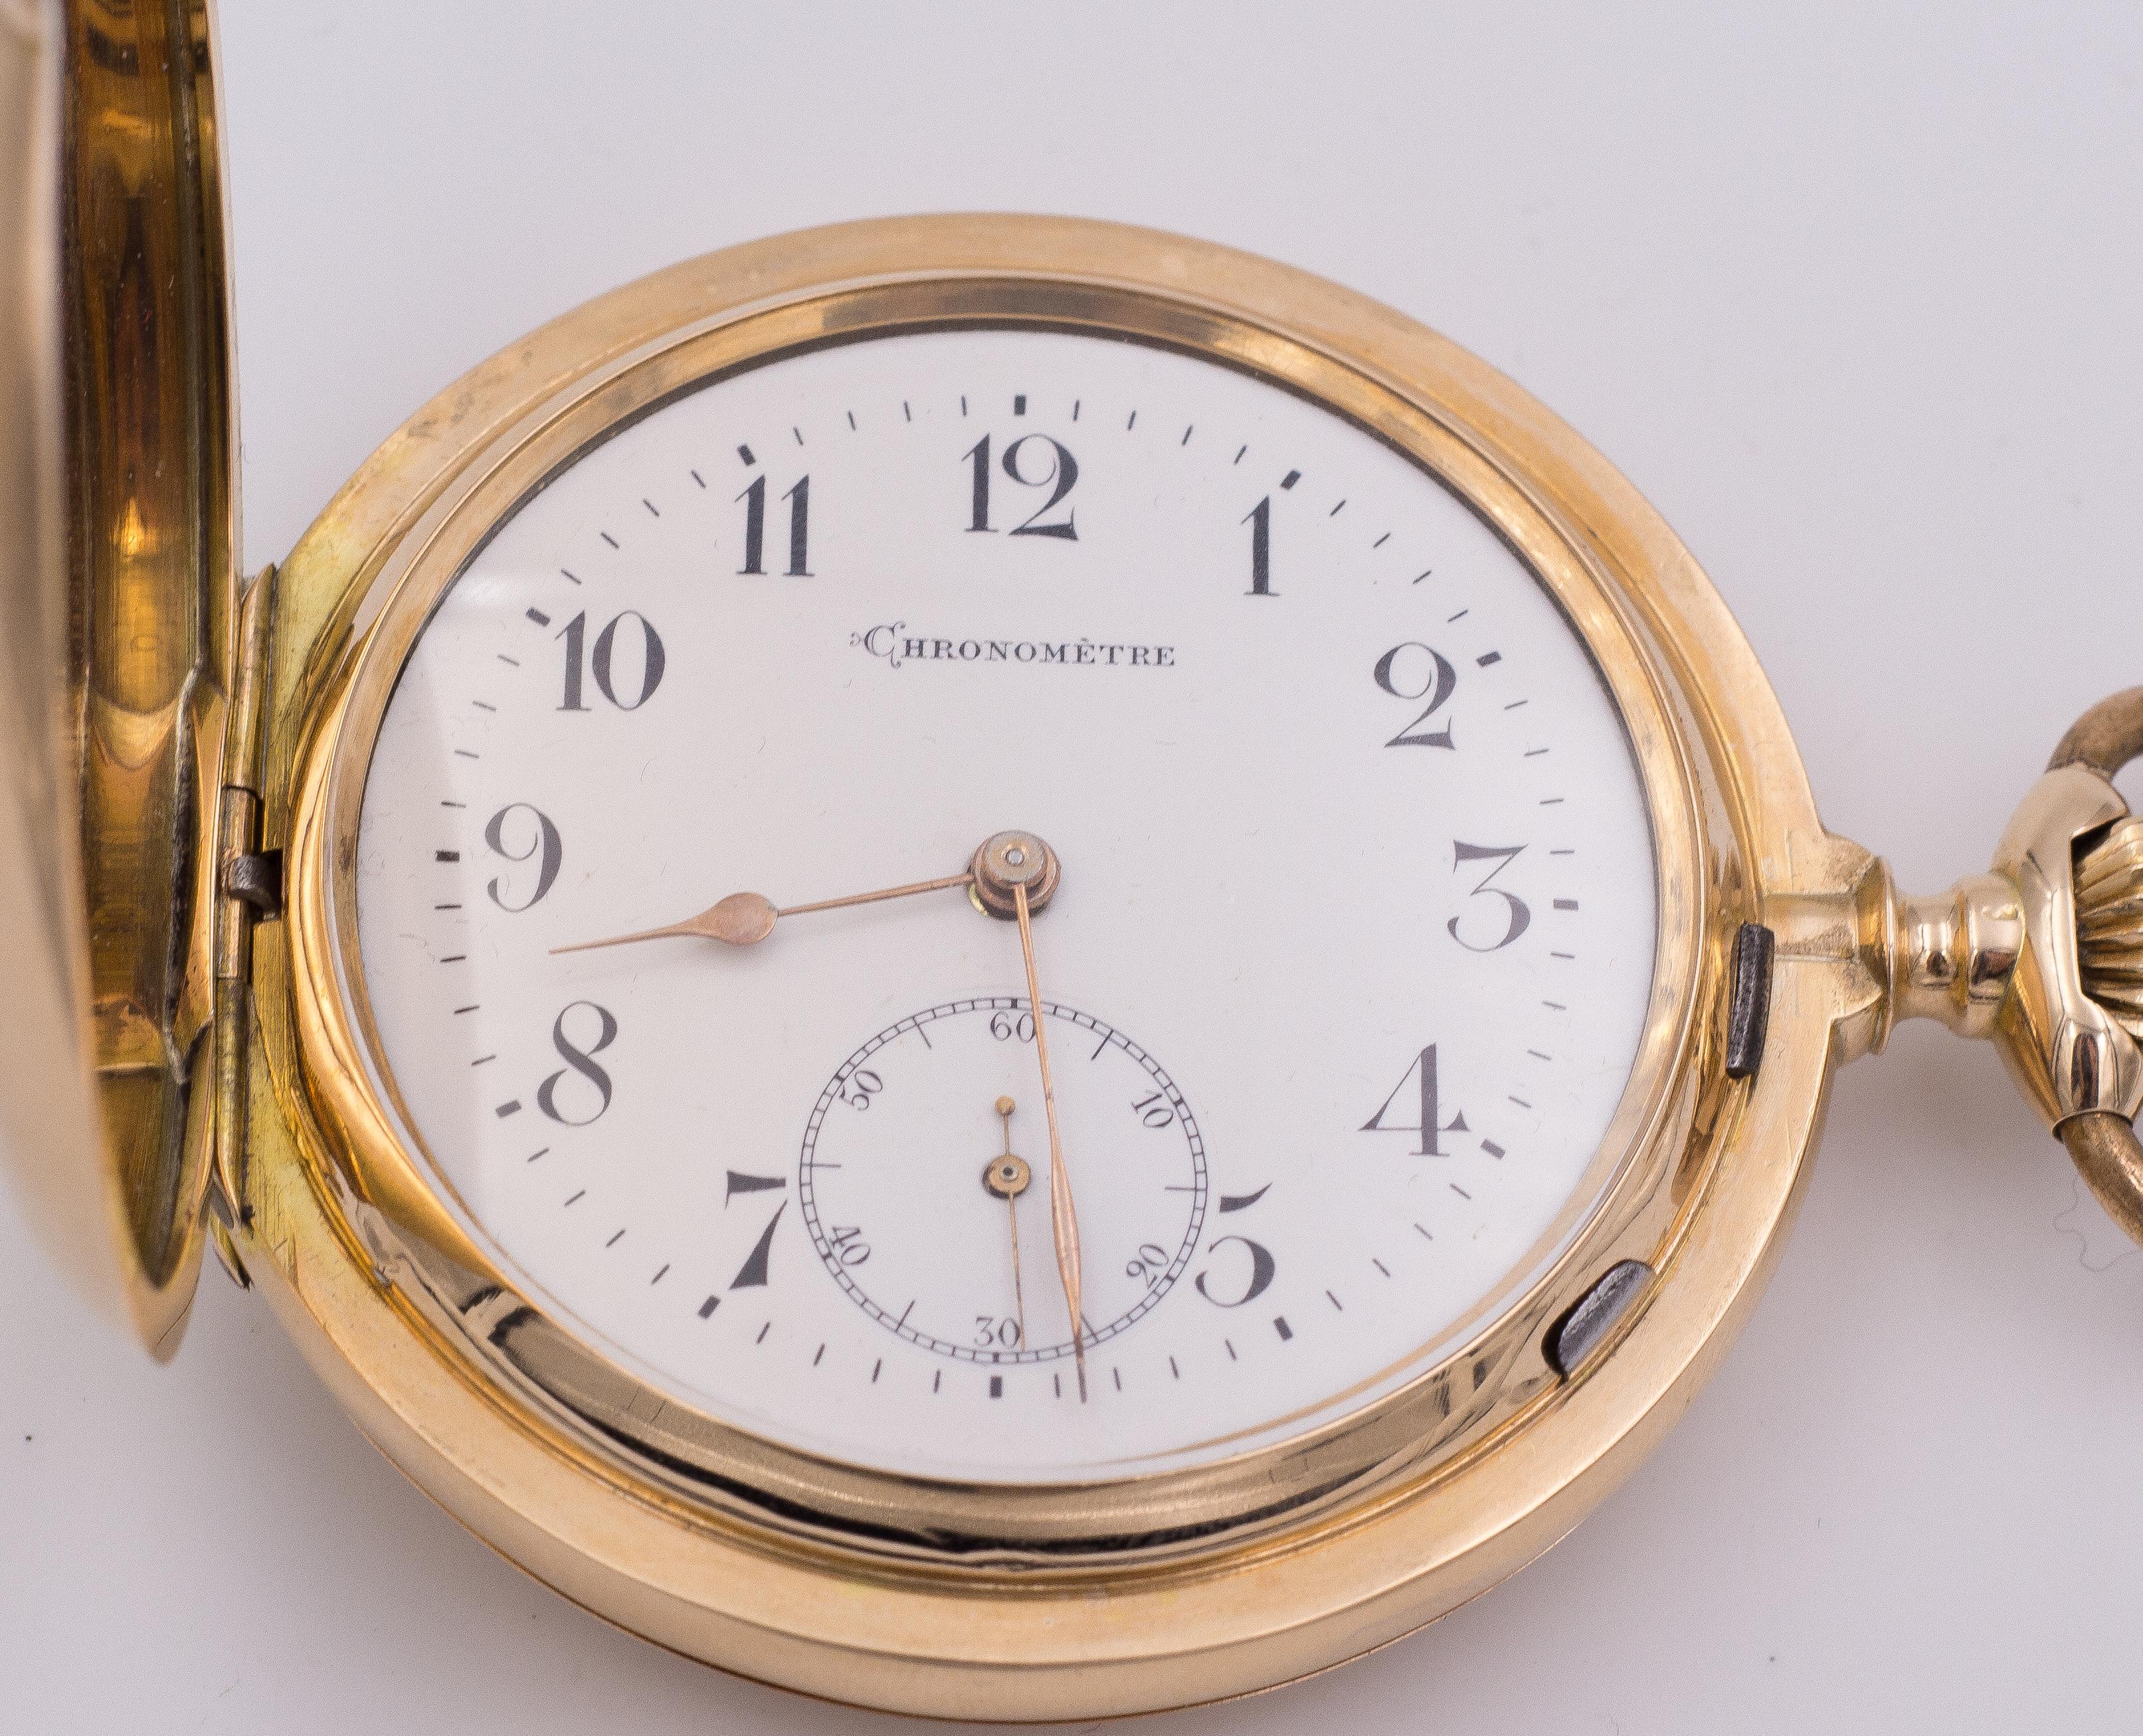 A stunning antique 14K gold savonette Chronomètre pocket watch, dating from the Late 19th Century, set with detent escapement. 

BRAND
Chronomètre

MATERIALS
14K gold

MEASUREMENTS
Diameter: 58 mm